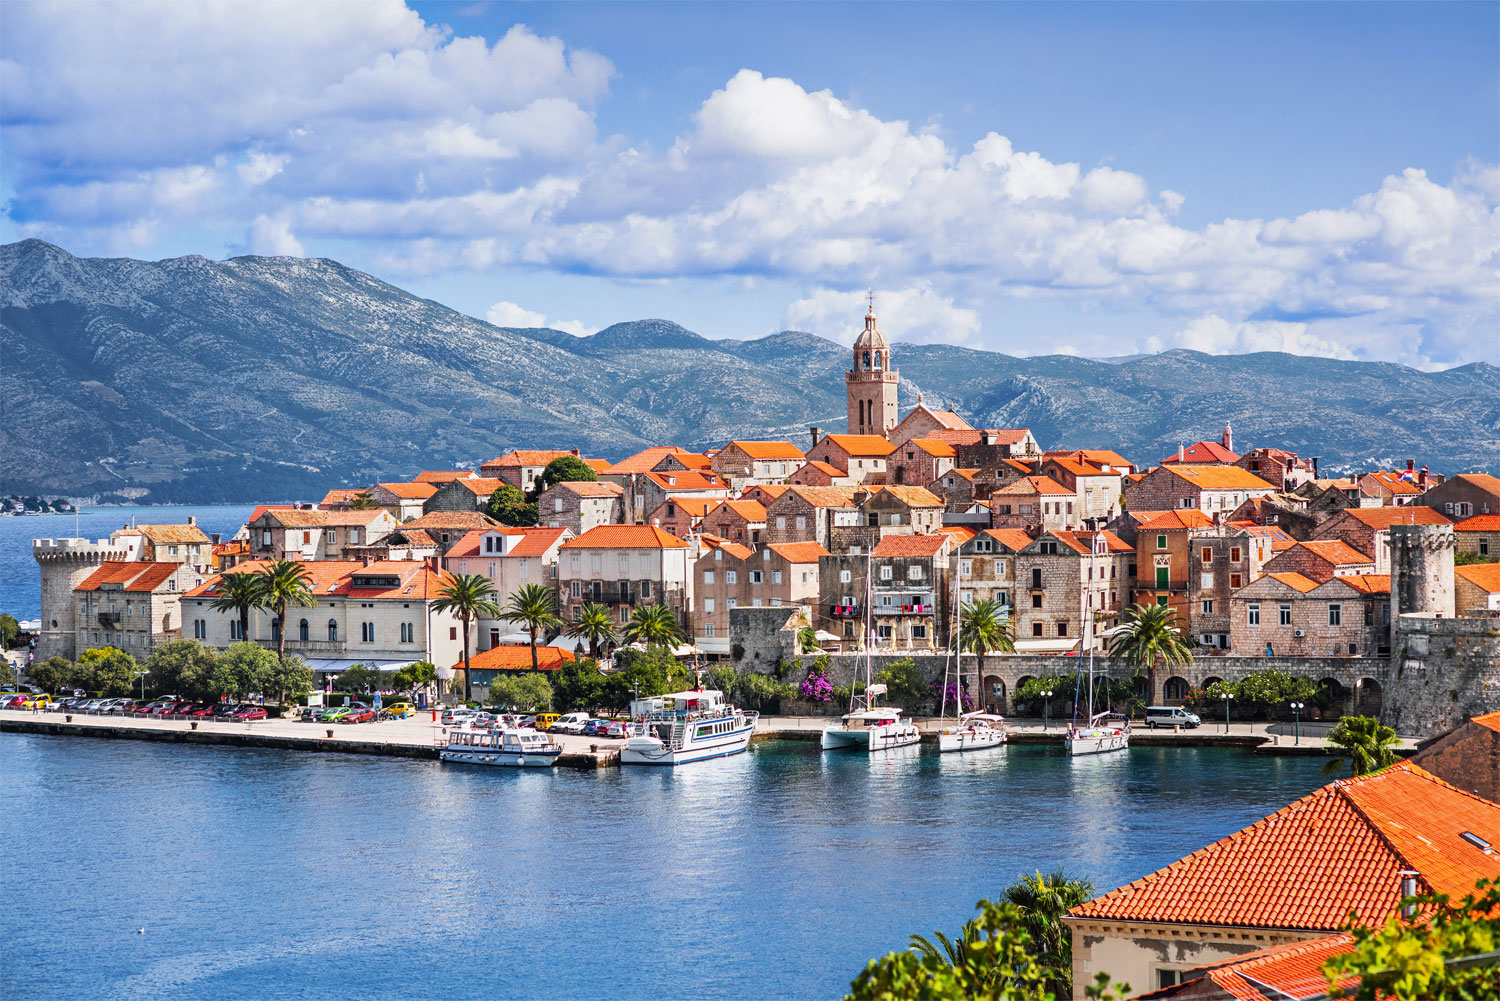 The beautiful historic Croatian town of Korcula